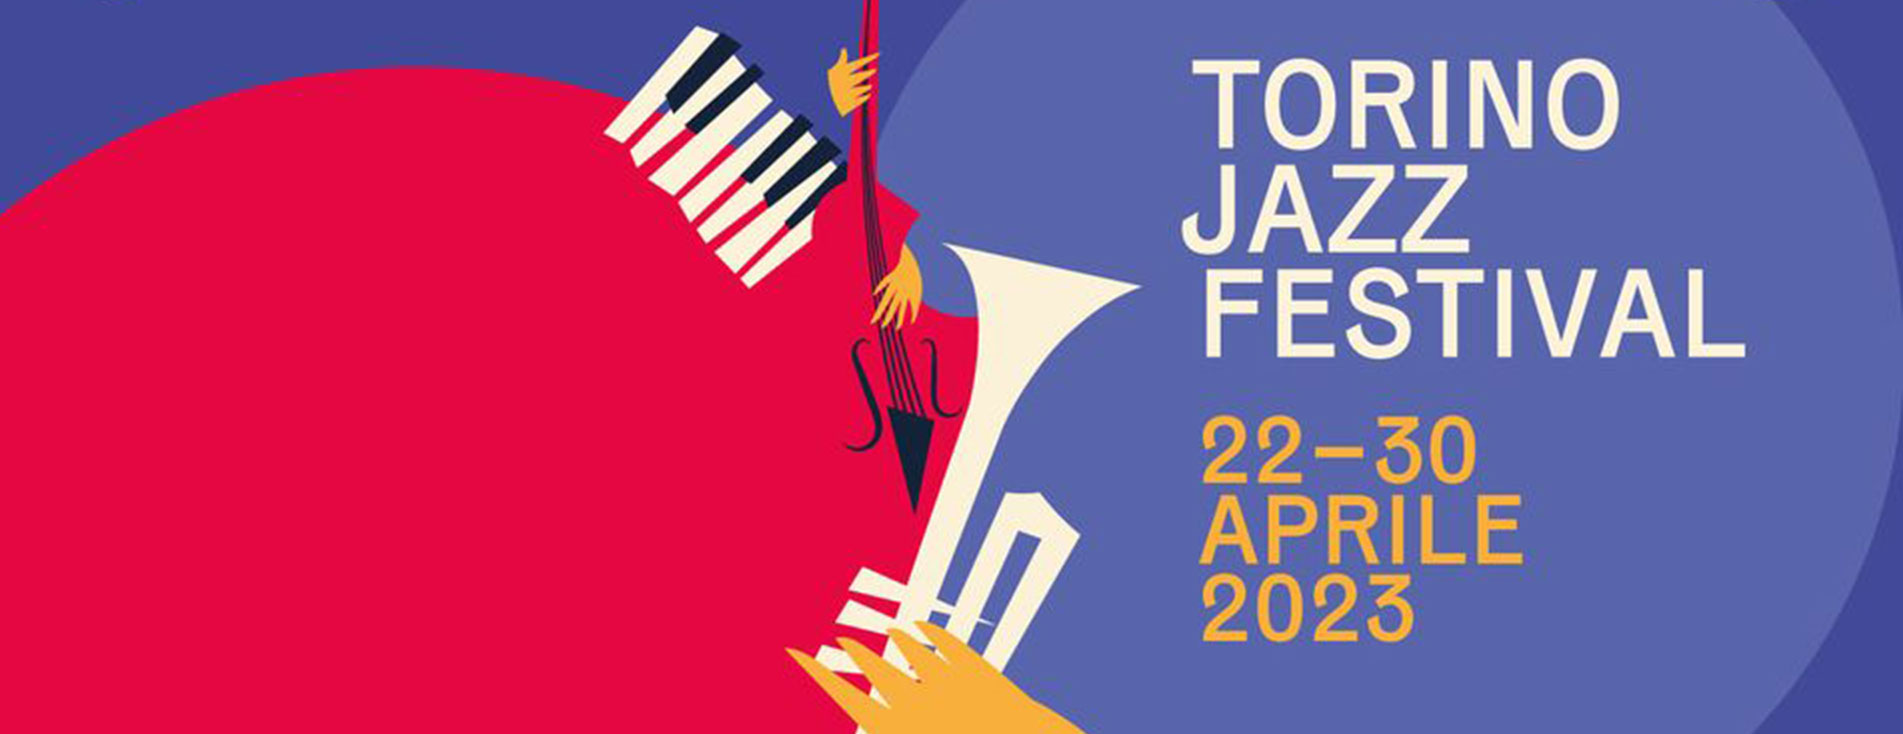 Torino Jazz Festival 2023